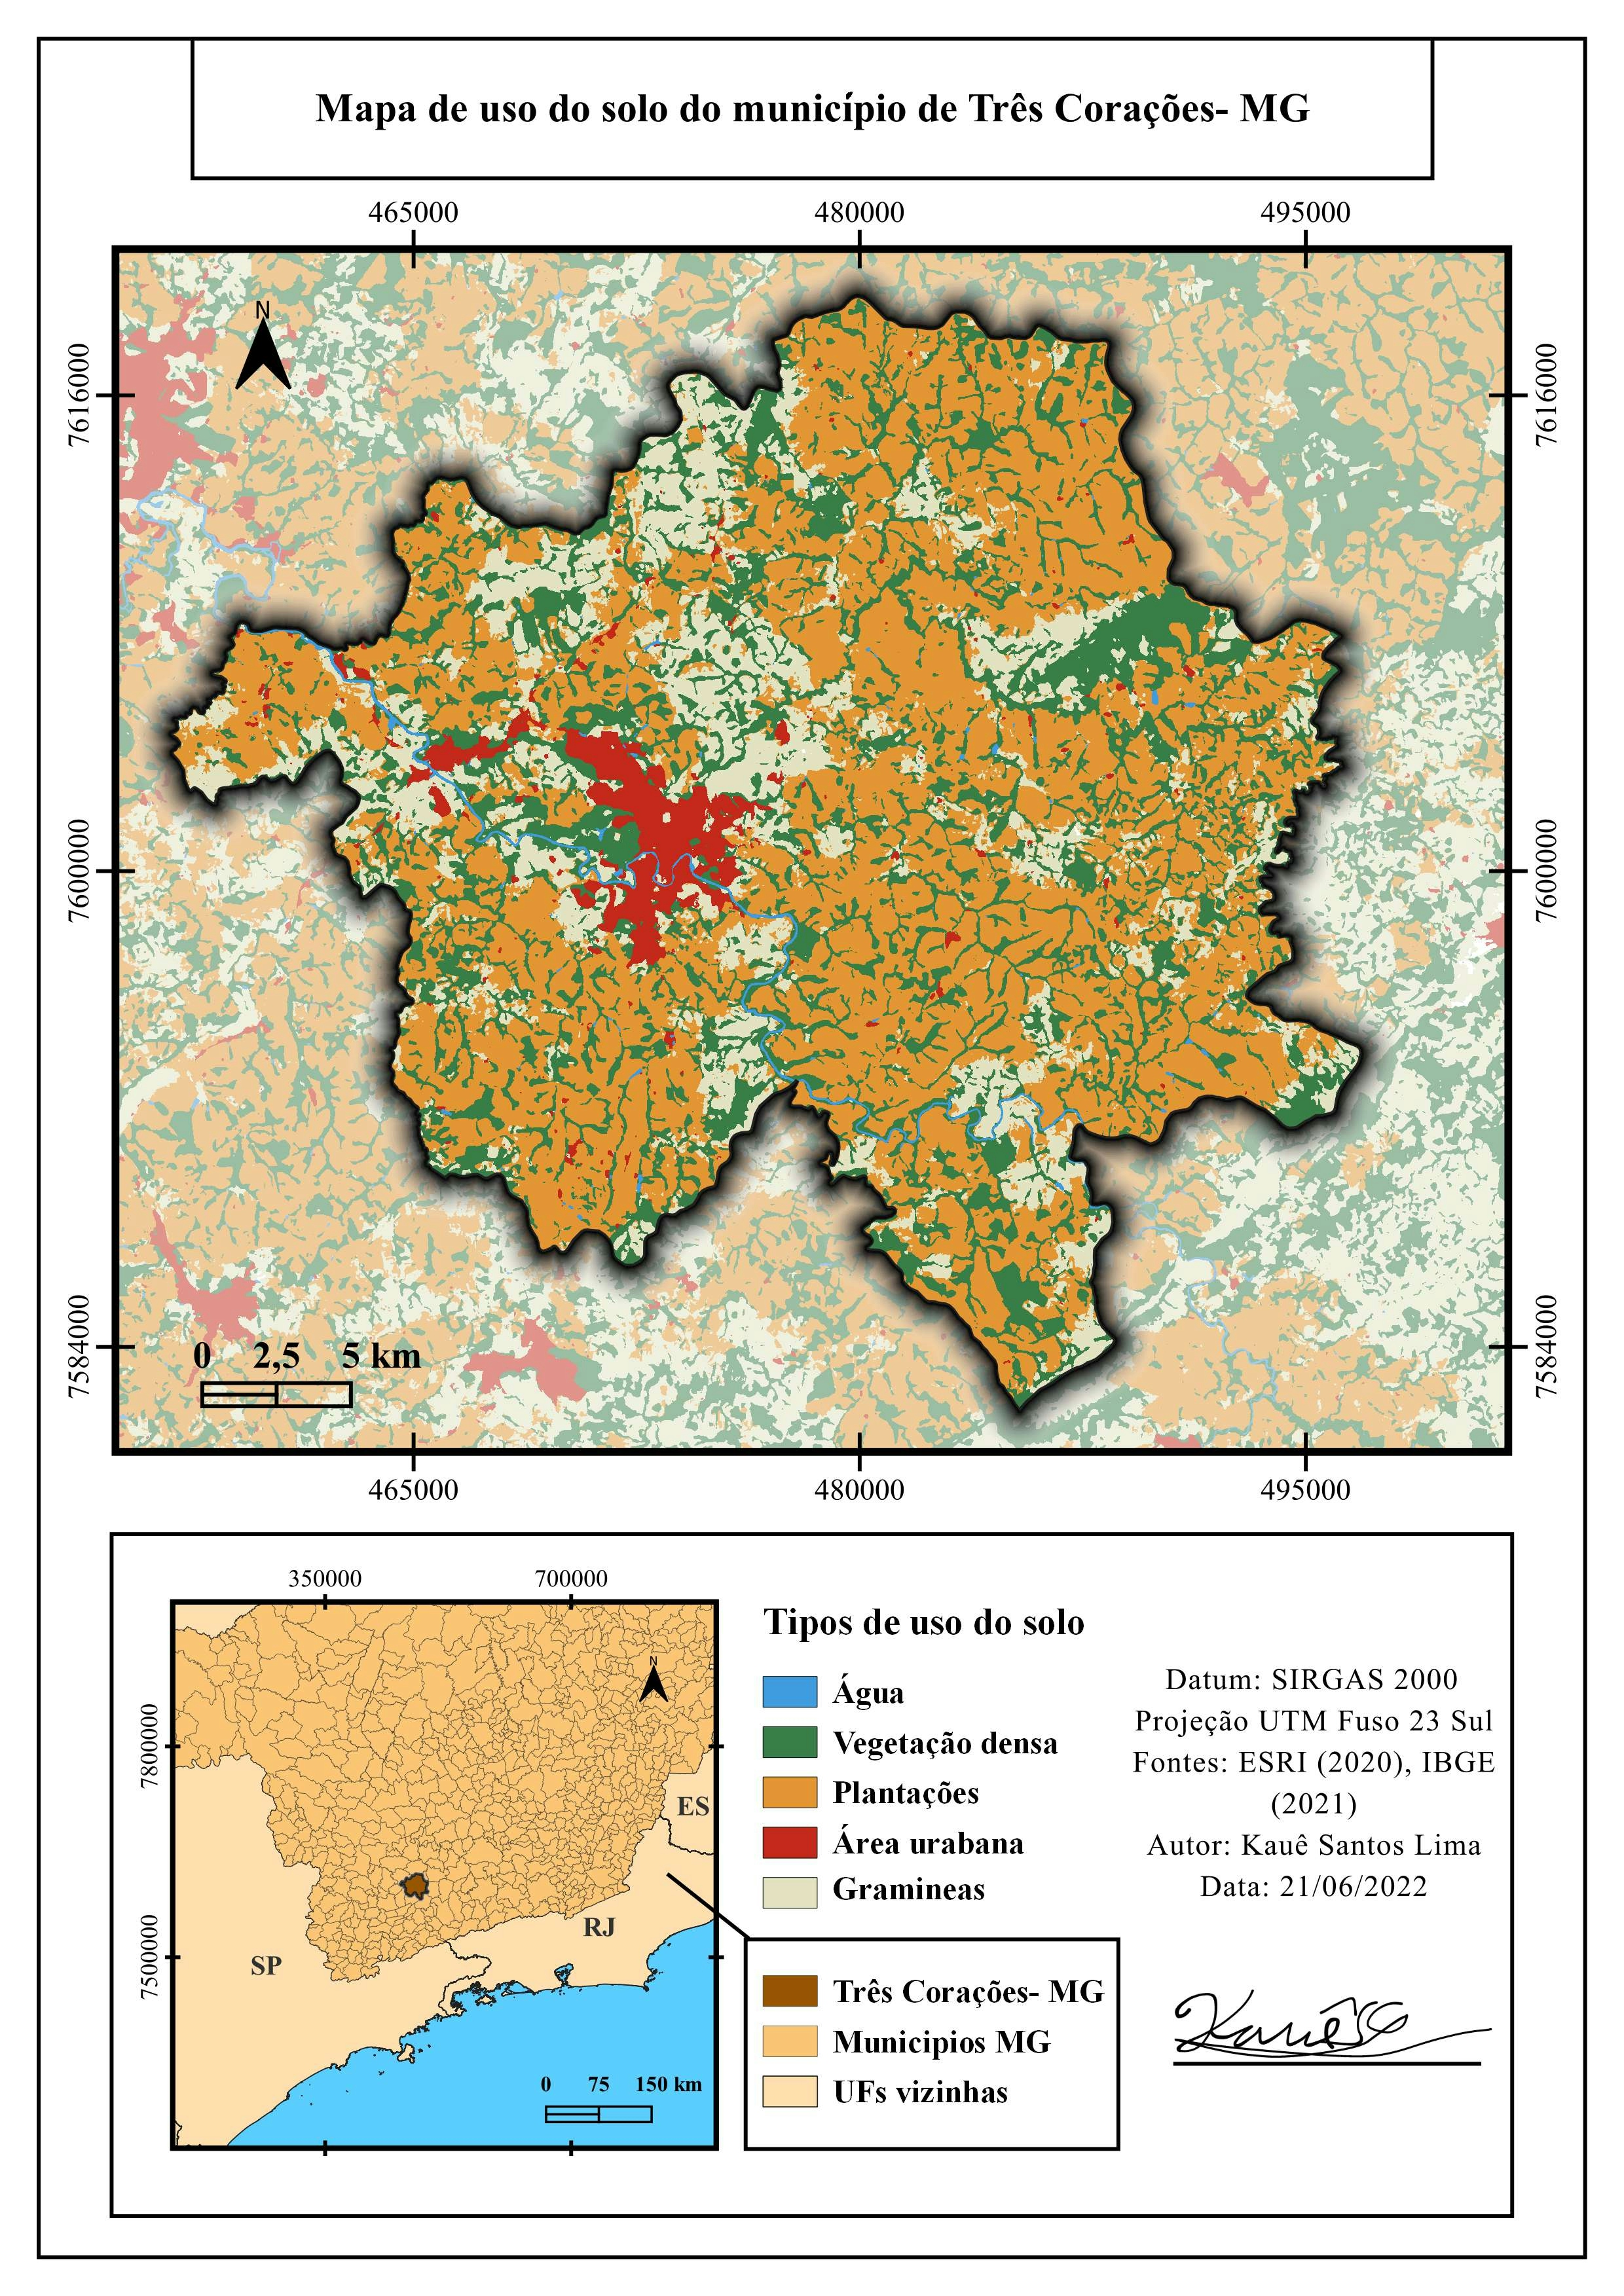 Land Use and Occupation of Três Corações